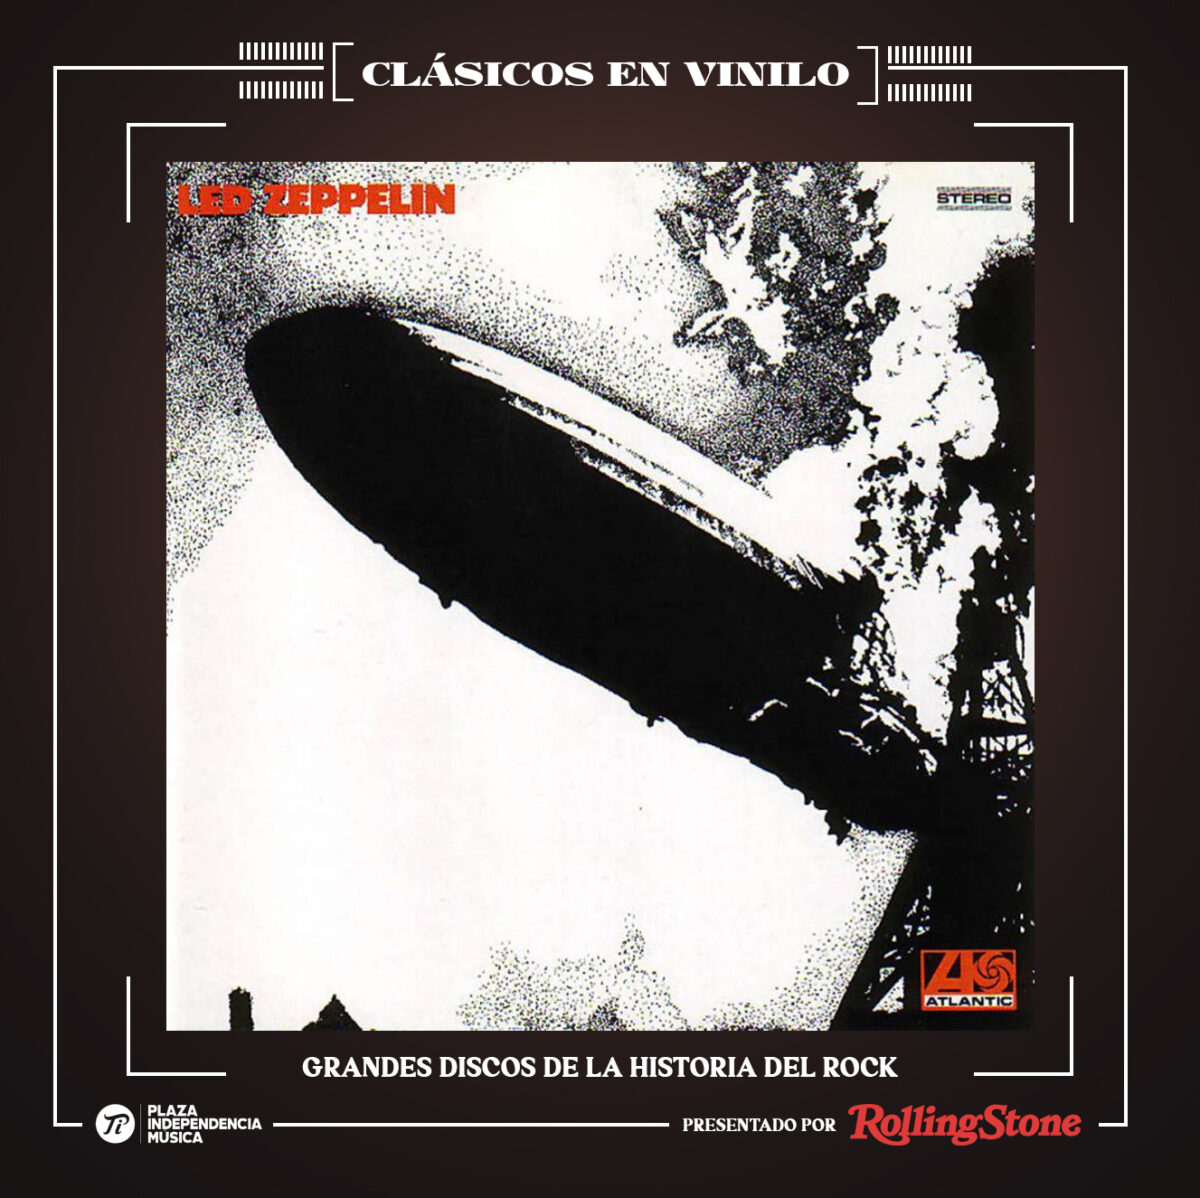 Led Zeppelin – Led Zeppelin 1LP+LIBRO